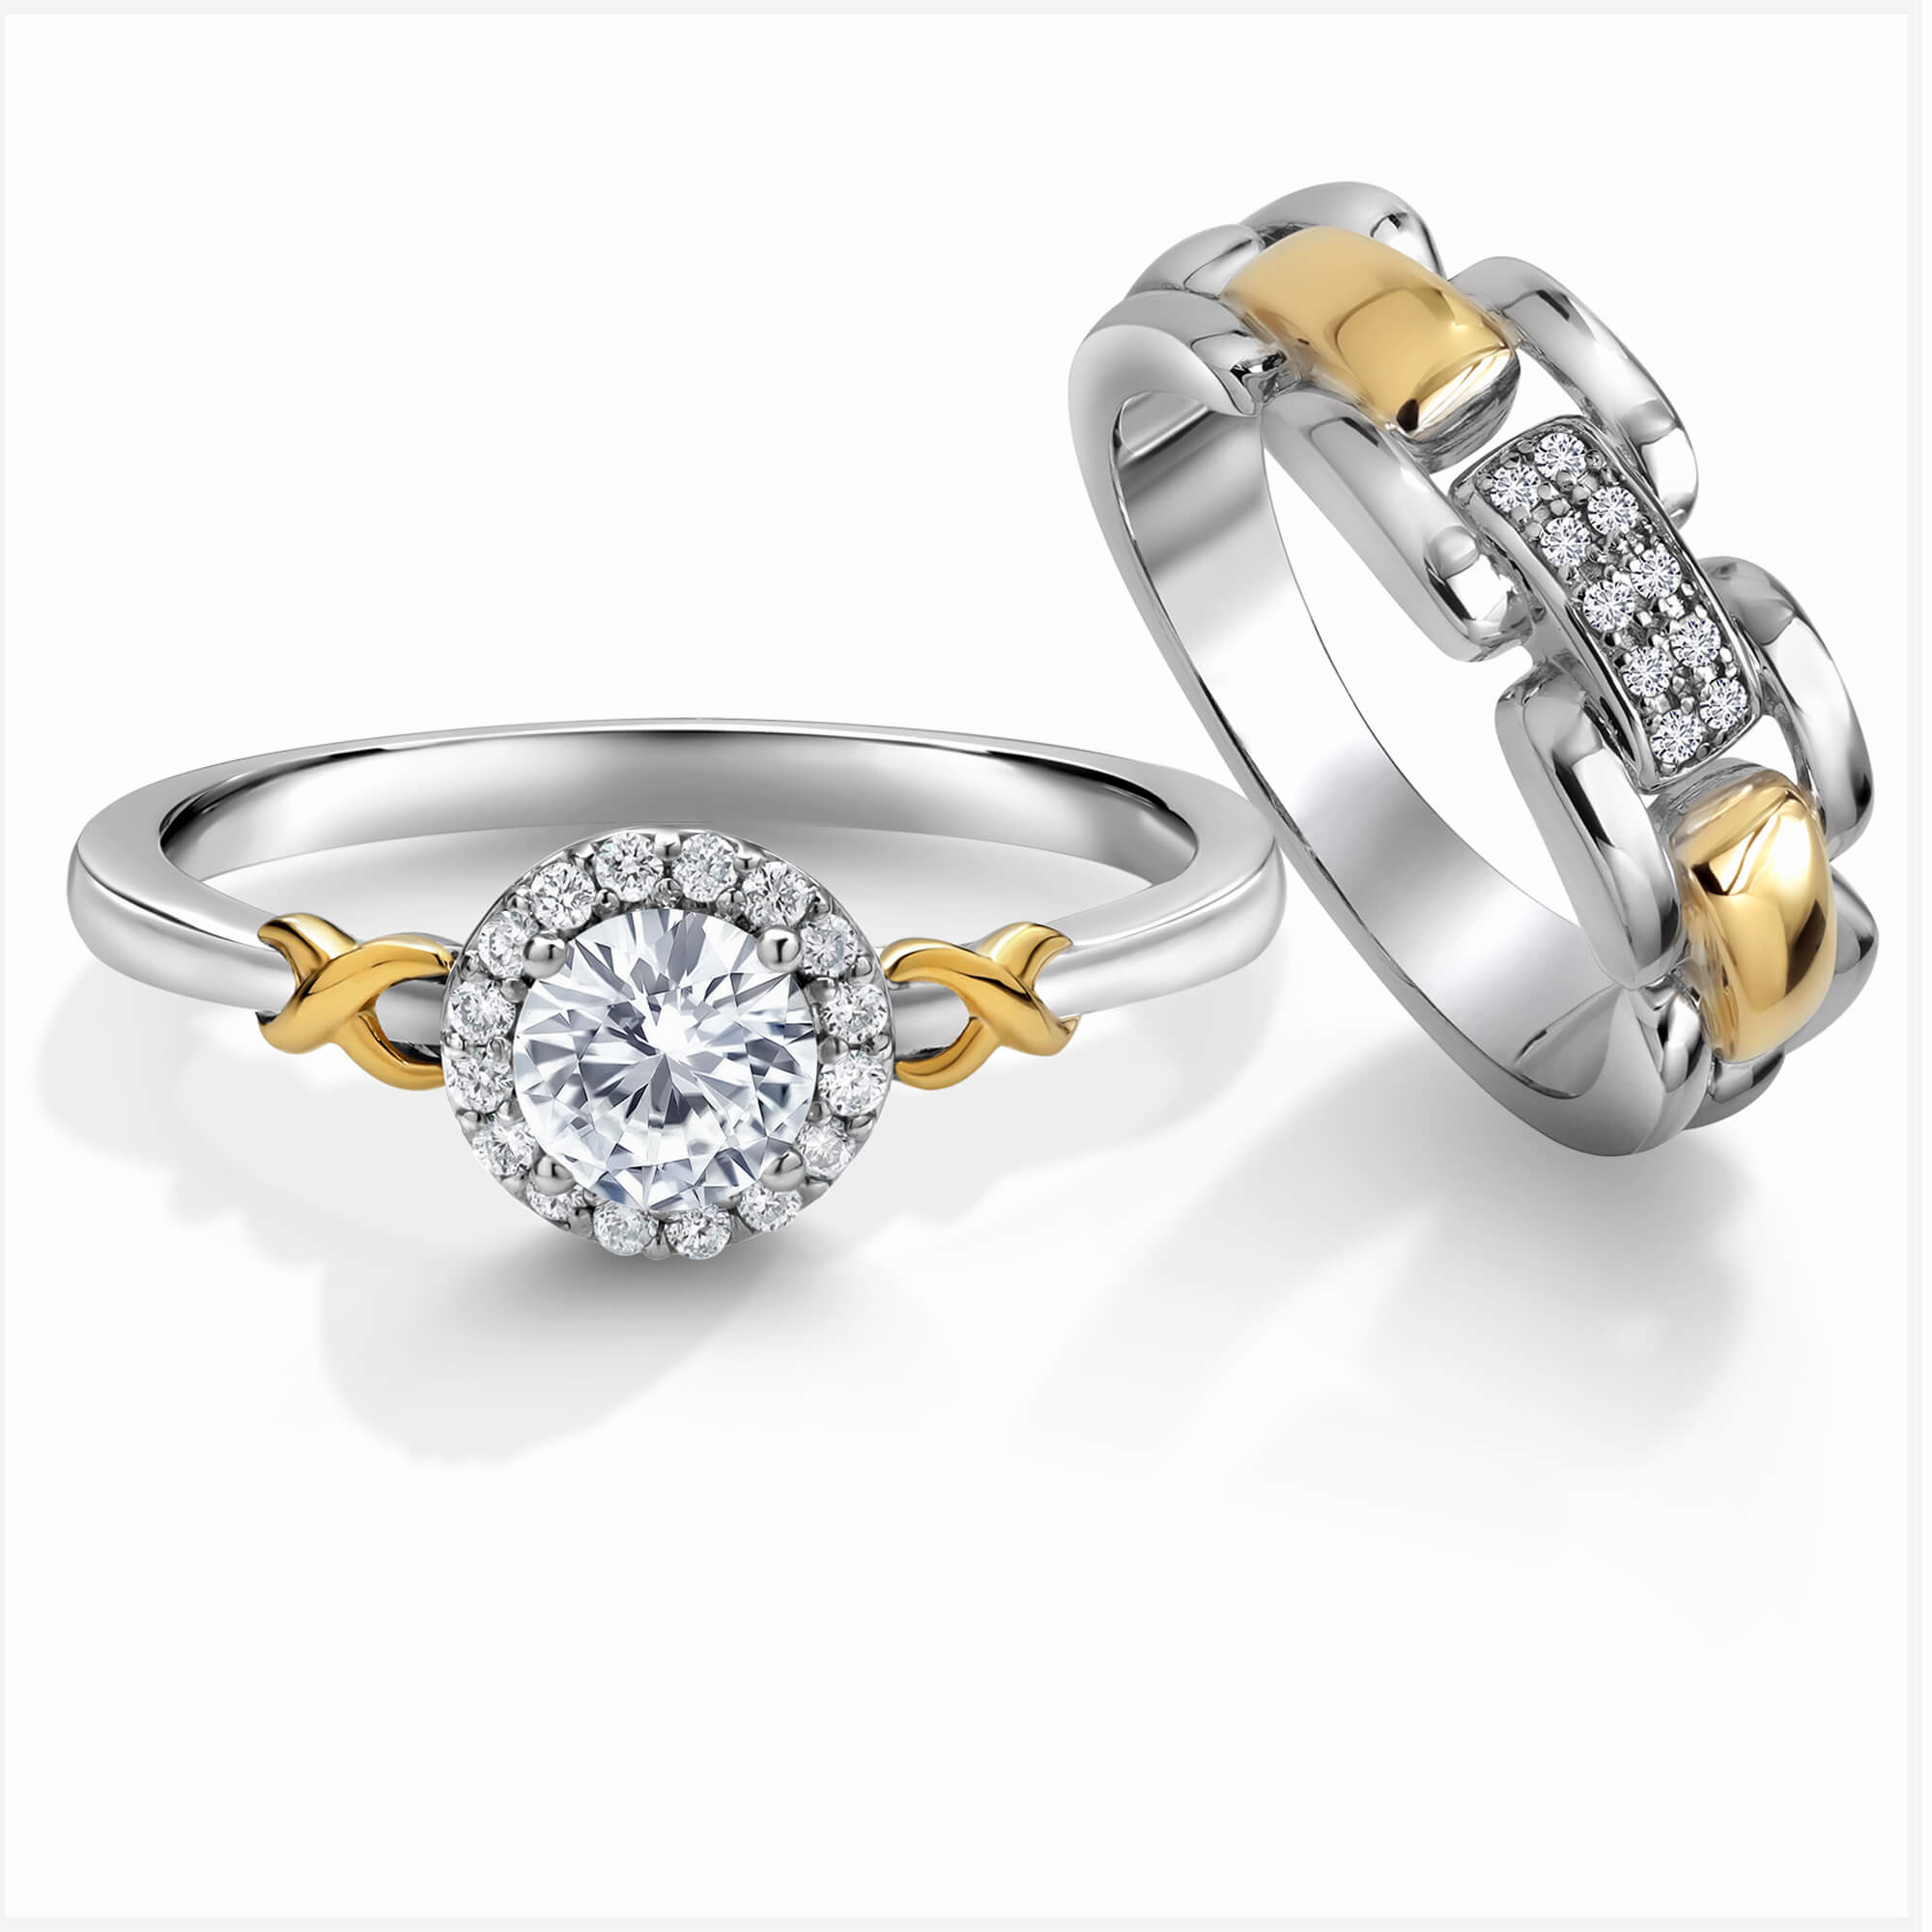 Gem Shopping  Fine Jewelry Retailer Website